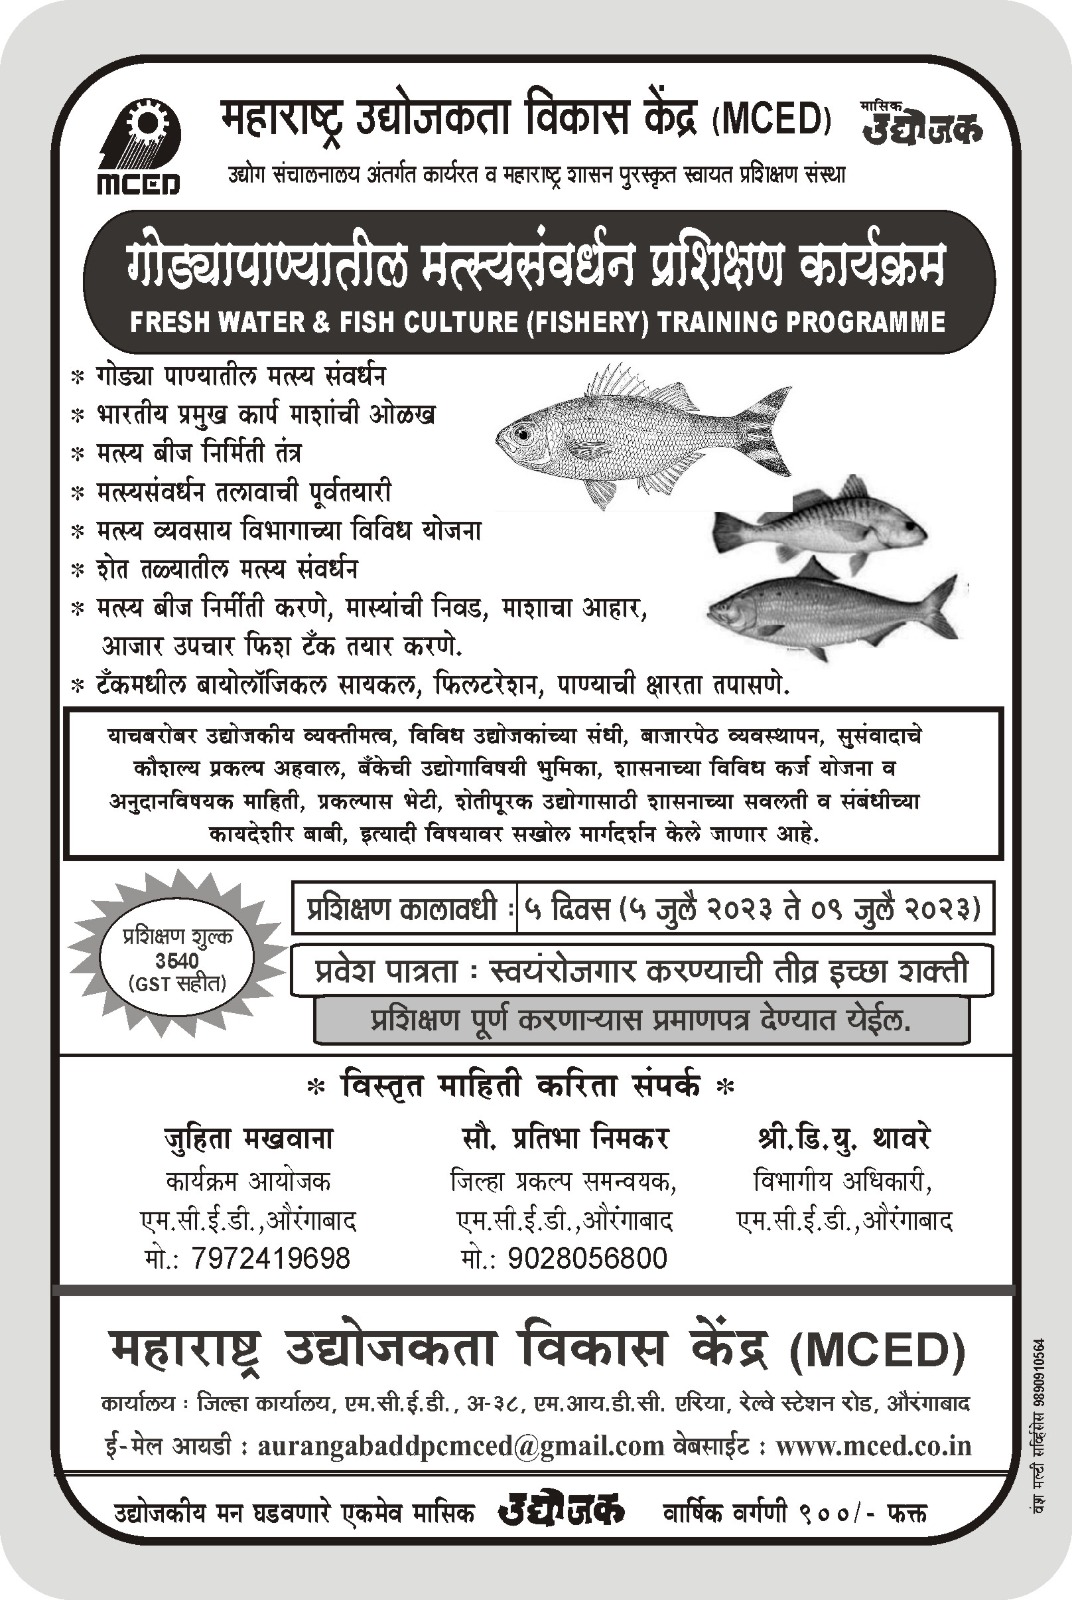 Fishery Training Programme